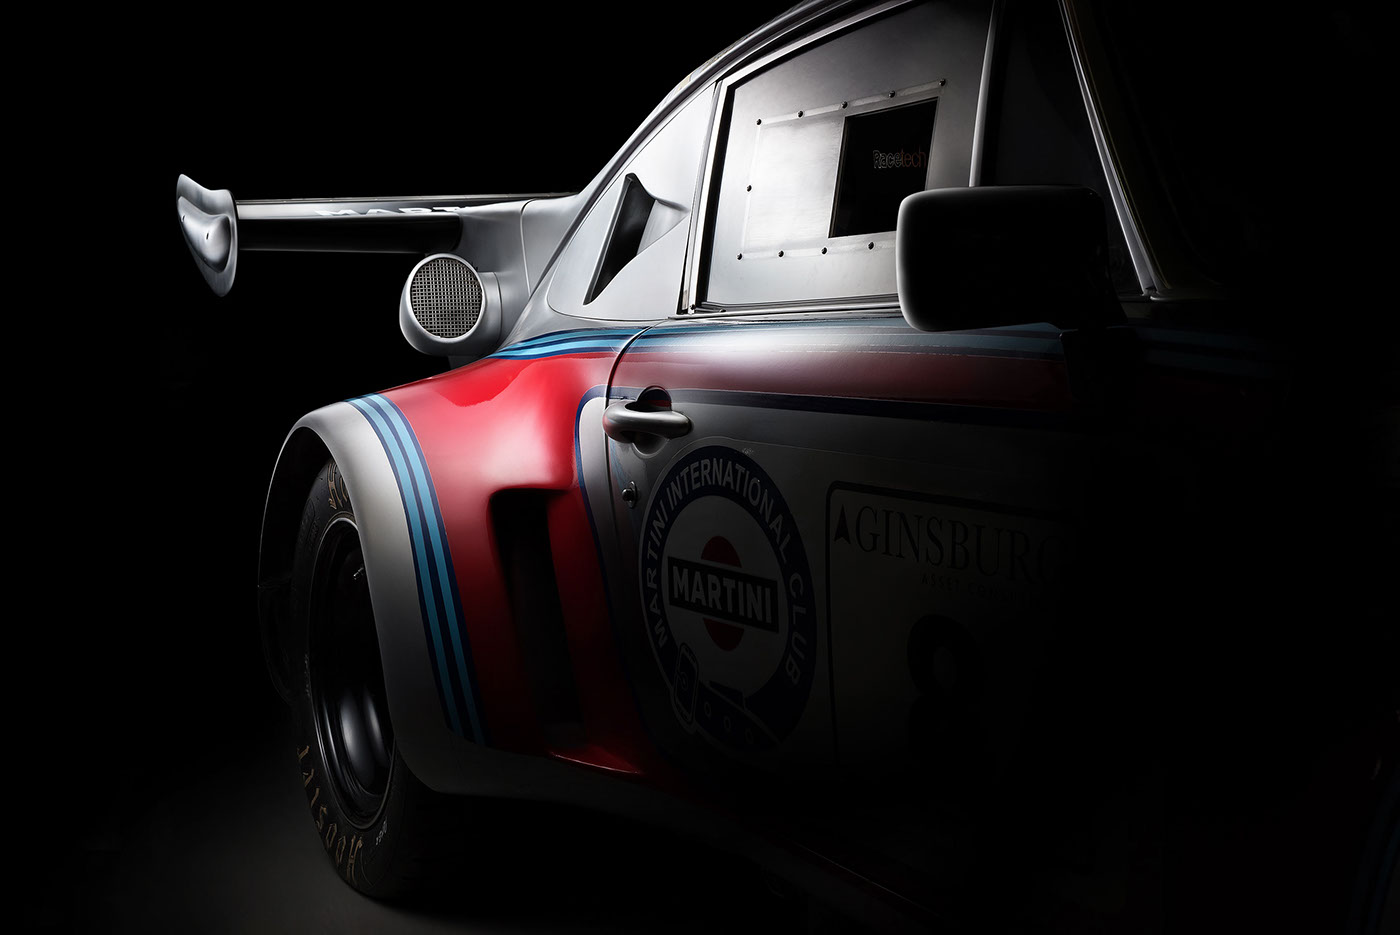 Martini Racing Porsche car Car Photographer automotive  